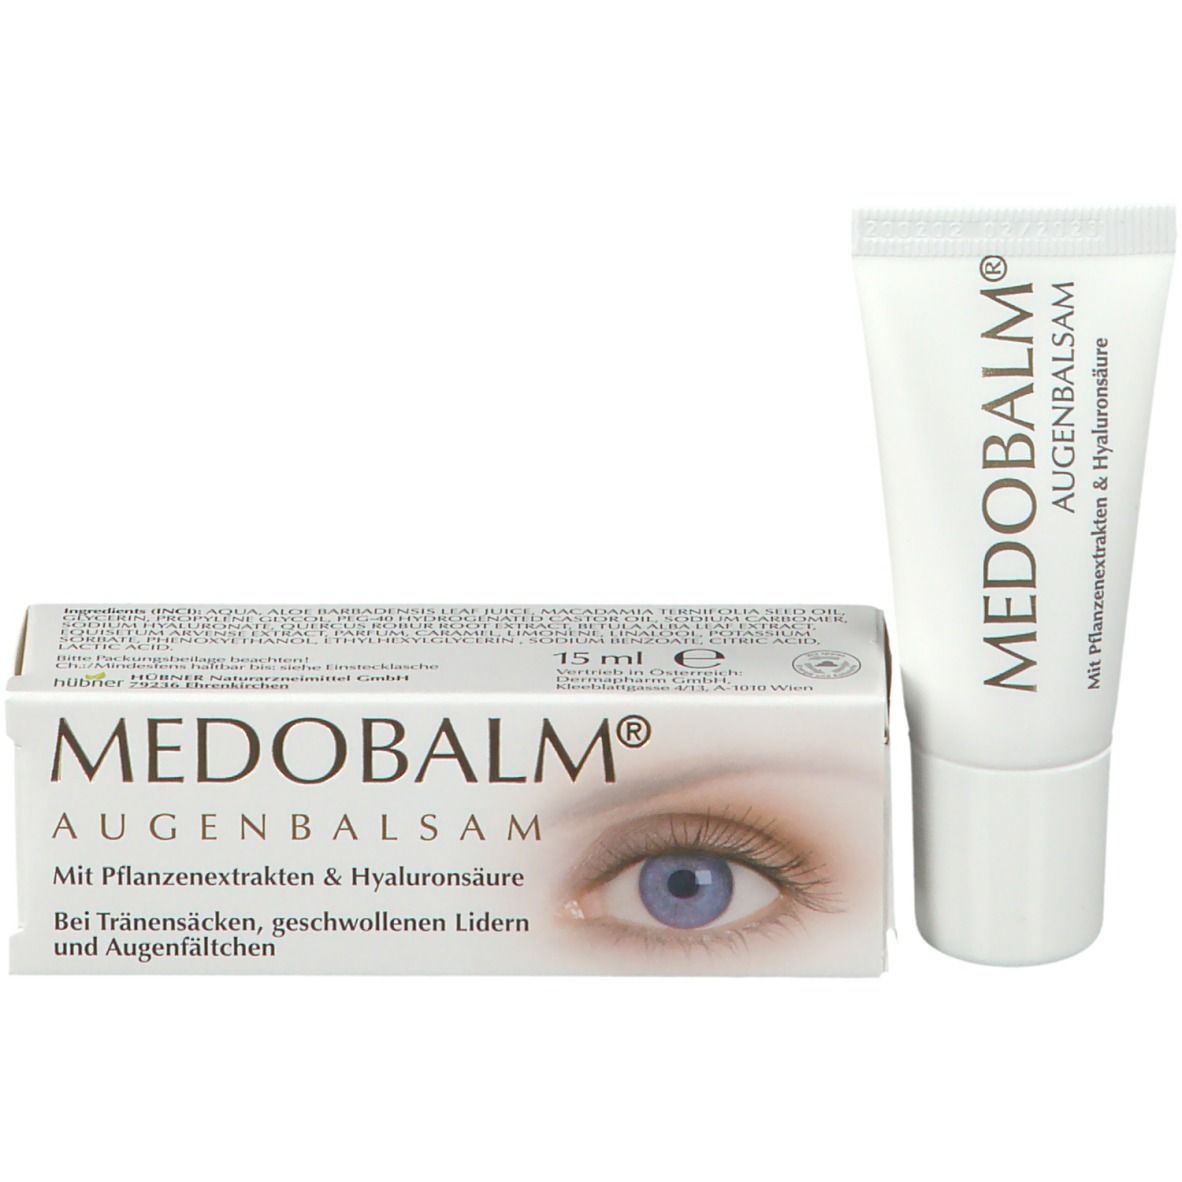 Medobalm® Augenbalsam